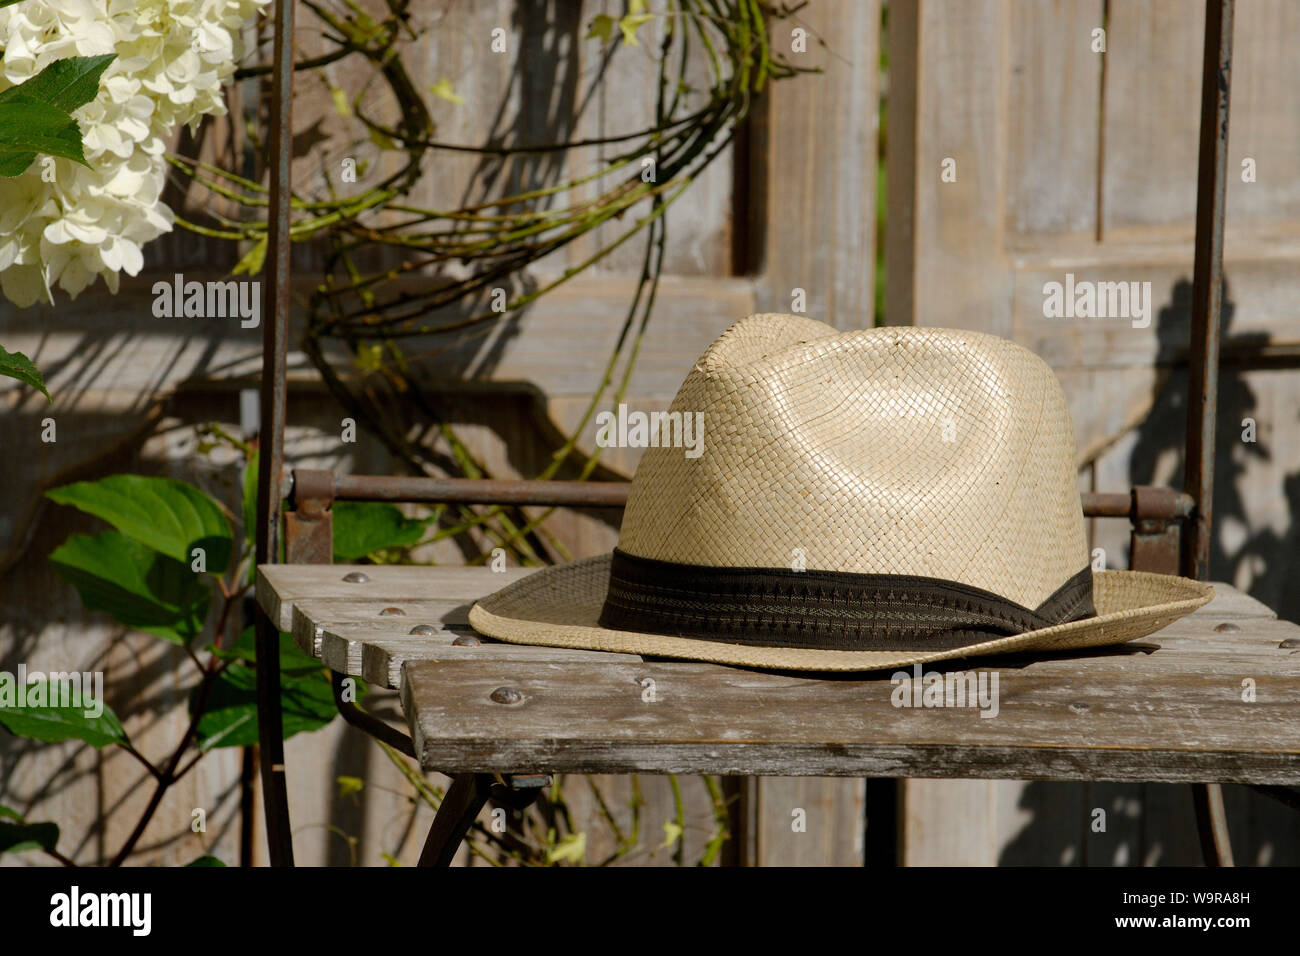 Straw hat on garden chair Stock Photo